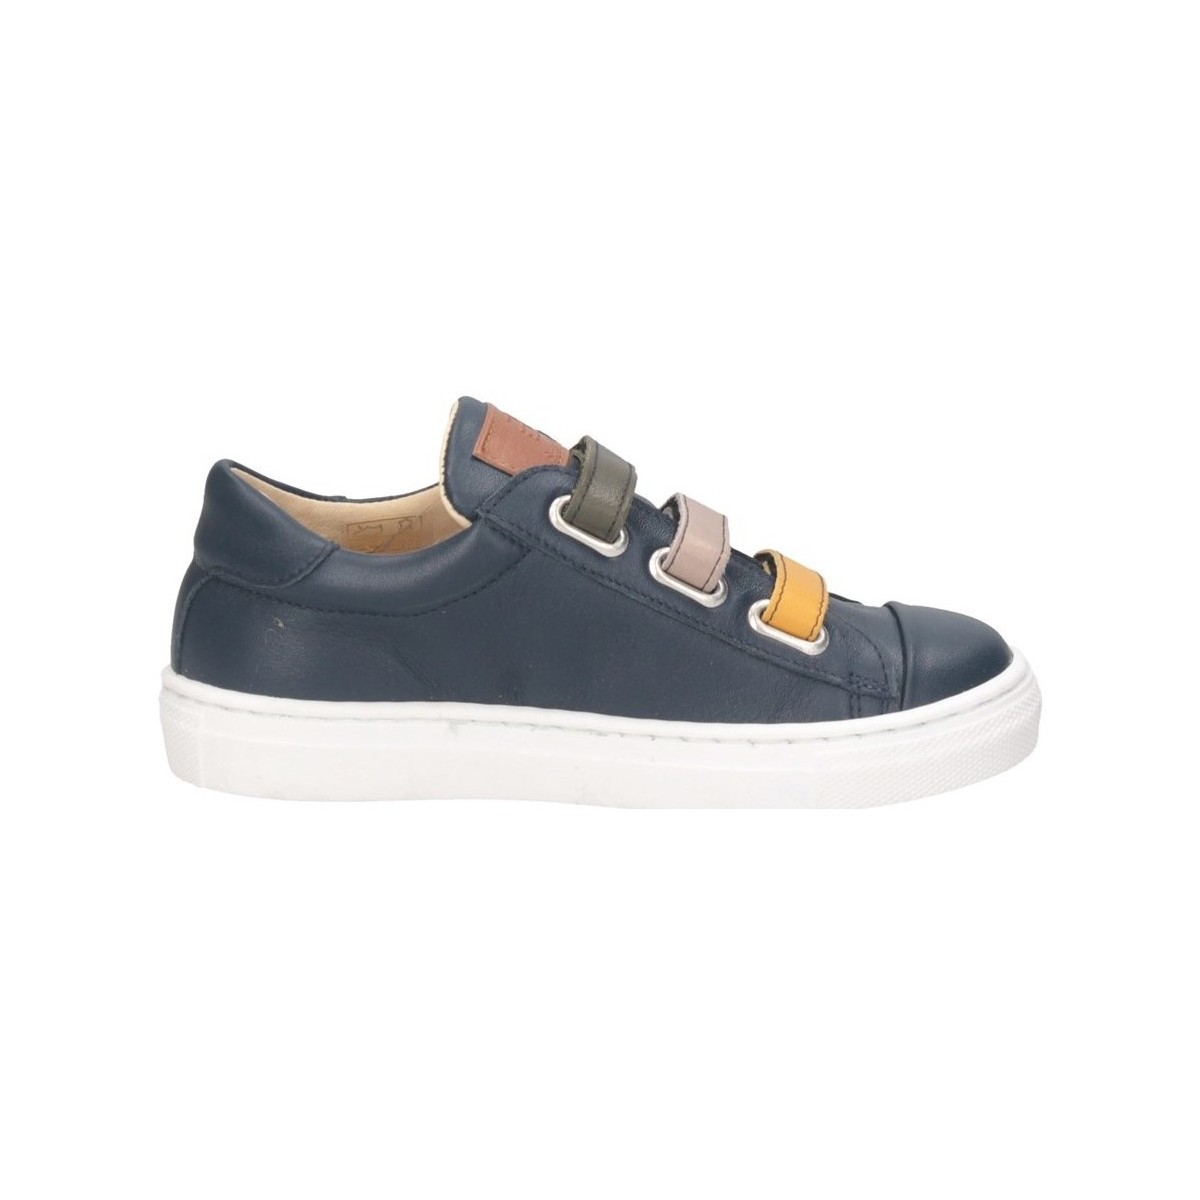 Schuhe Jungen Sneaker Low Andanines 212752-7 Blau